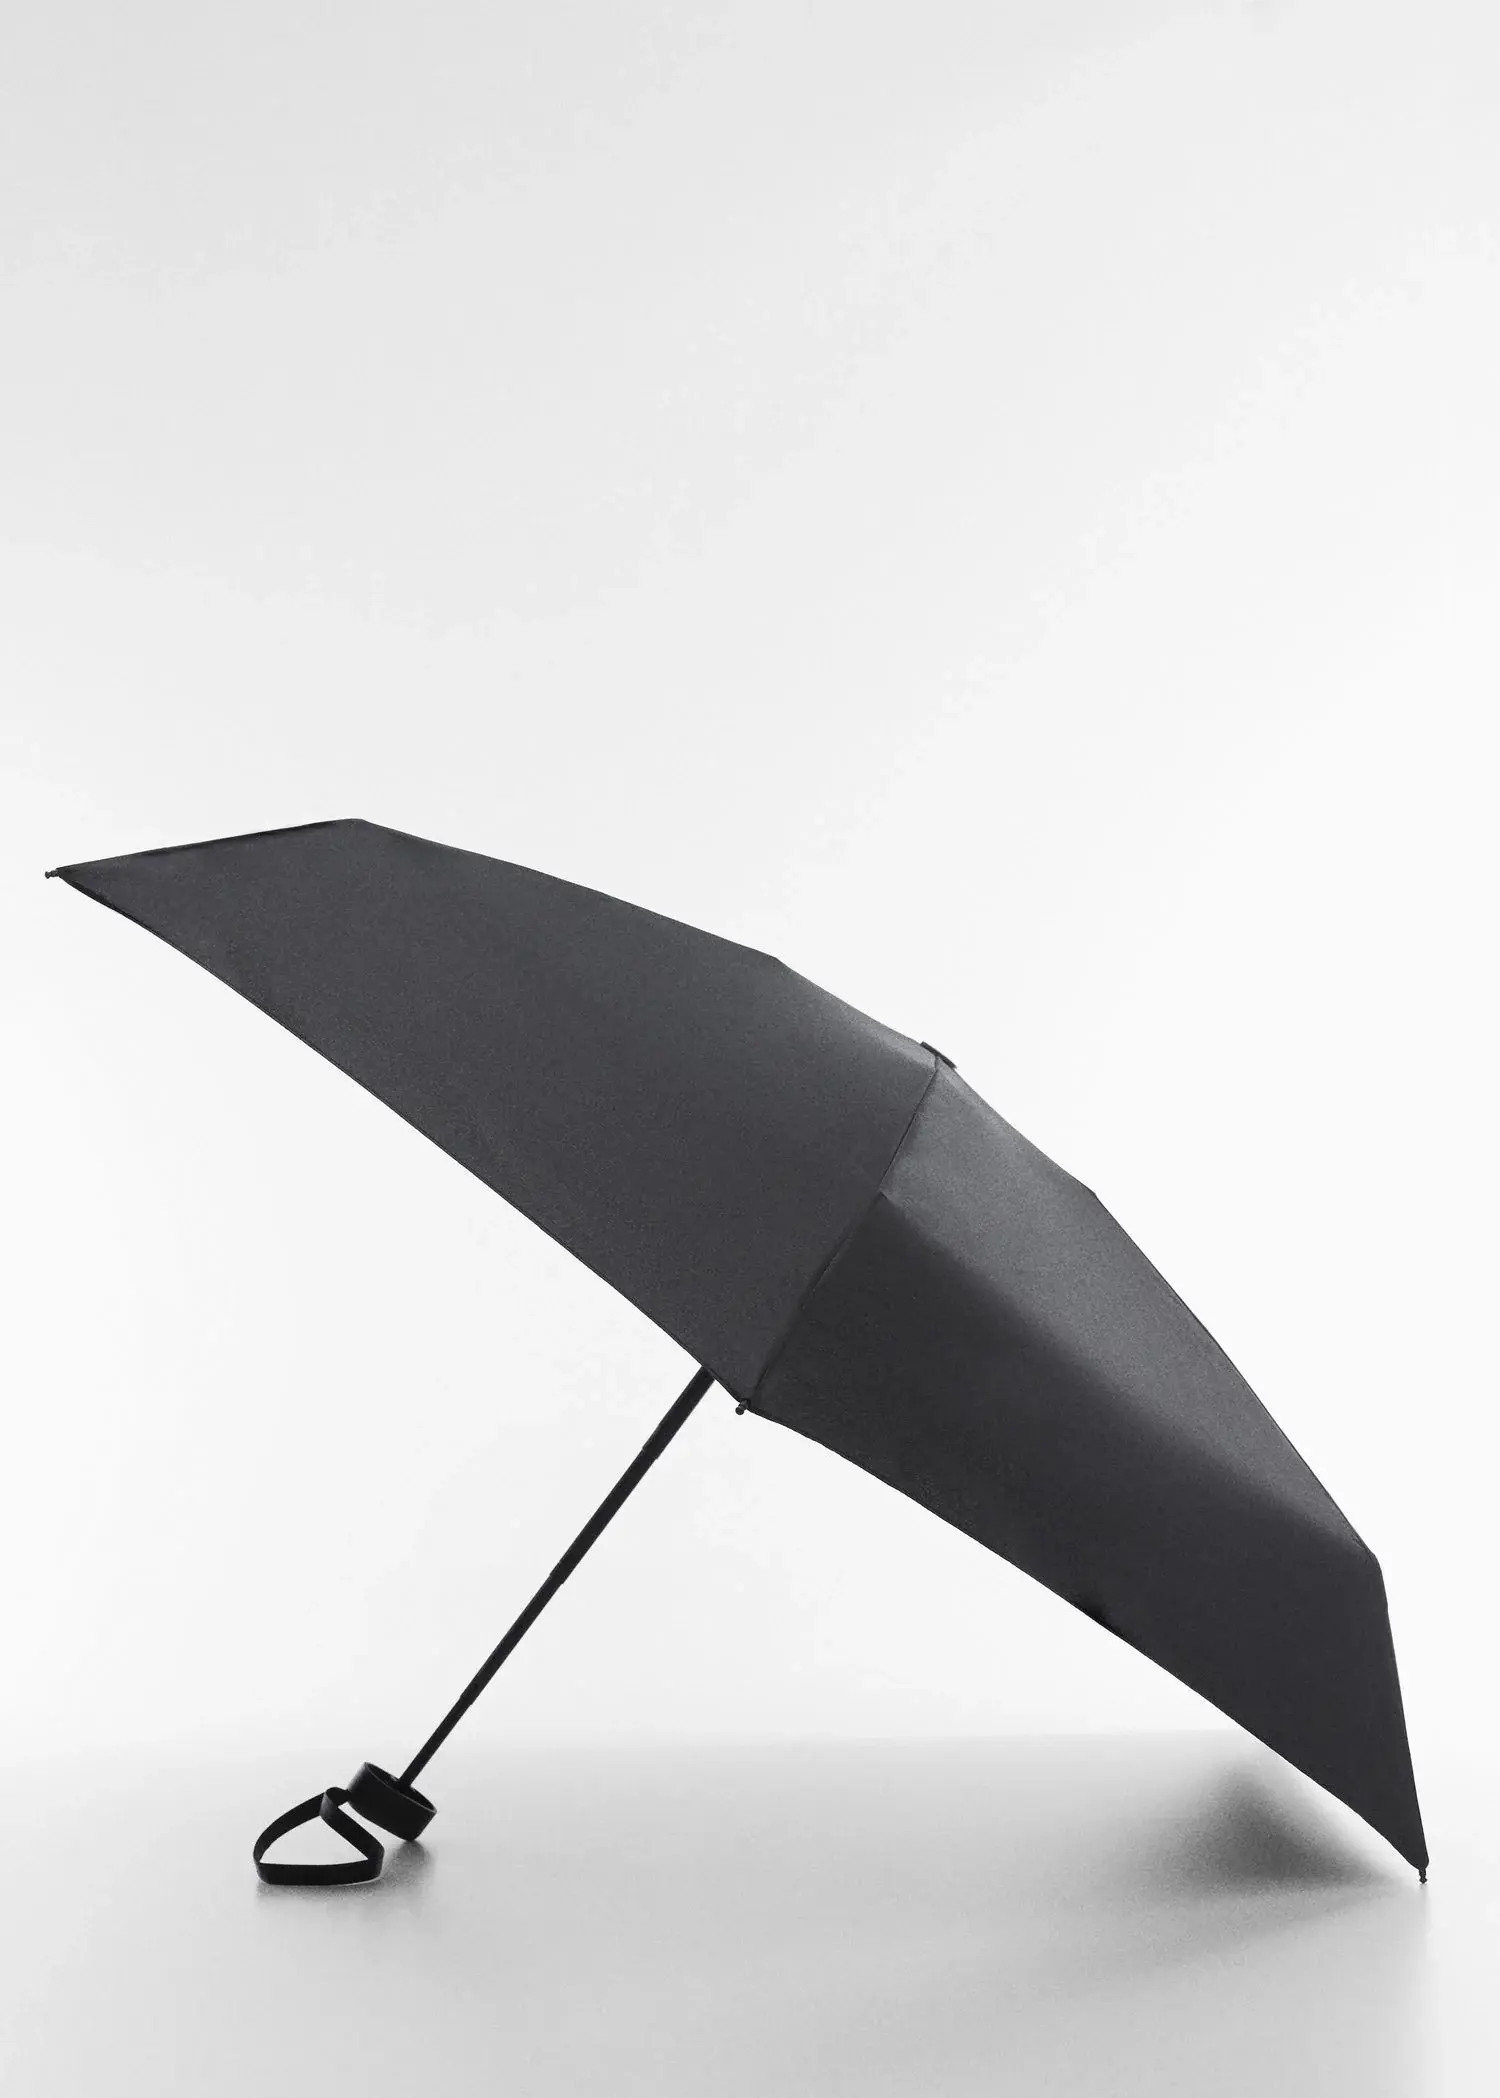 Mango Plain folding umbrella. an open black umbrella on a white surface. 